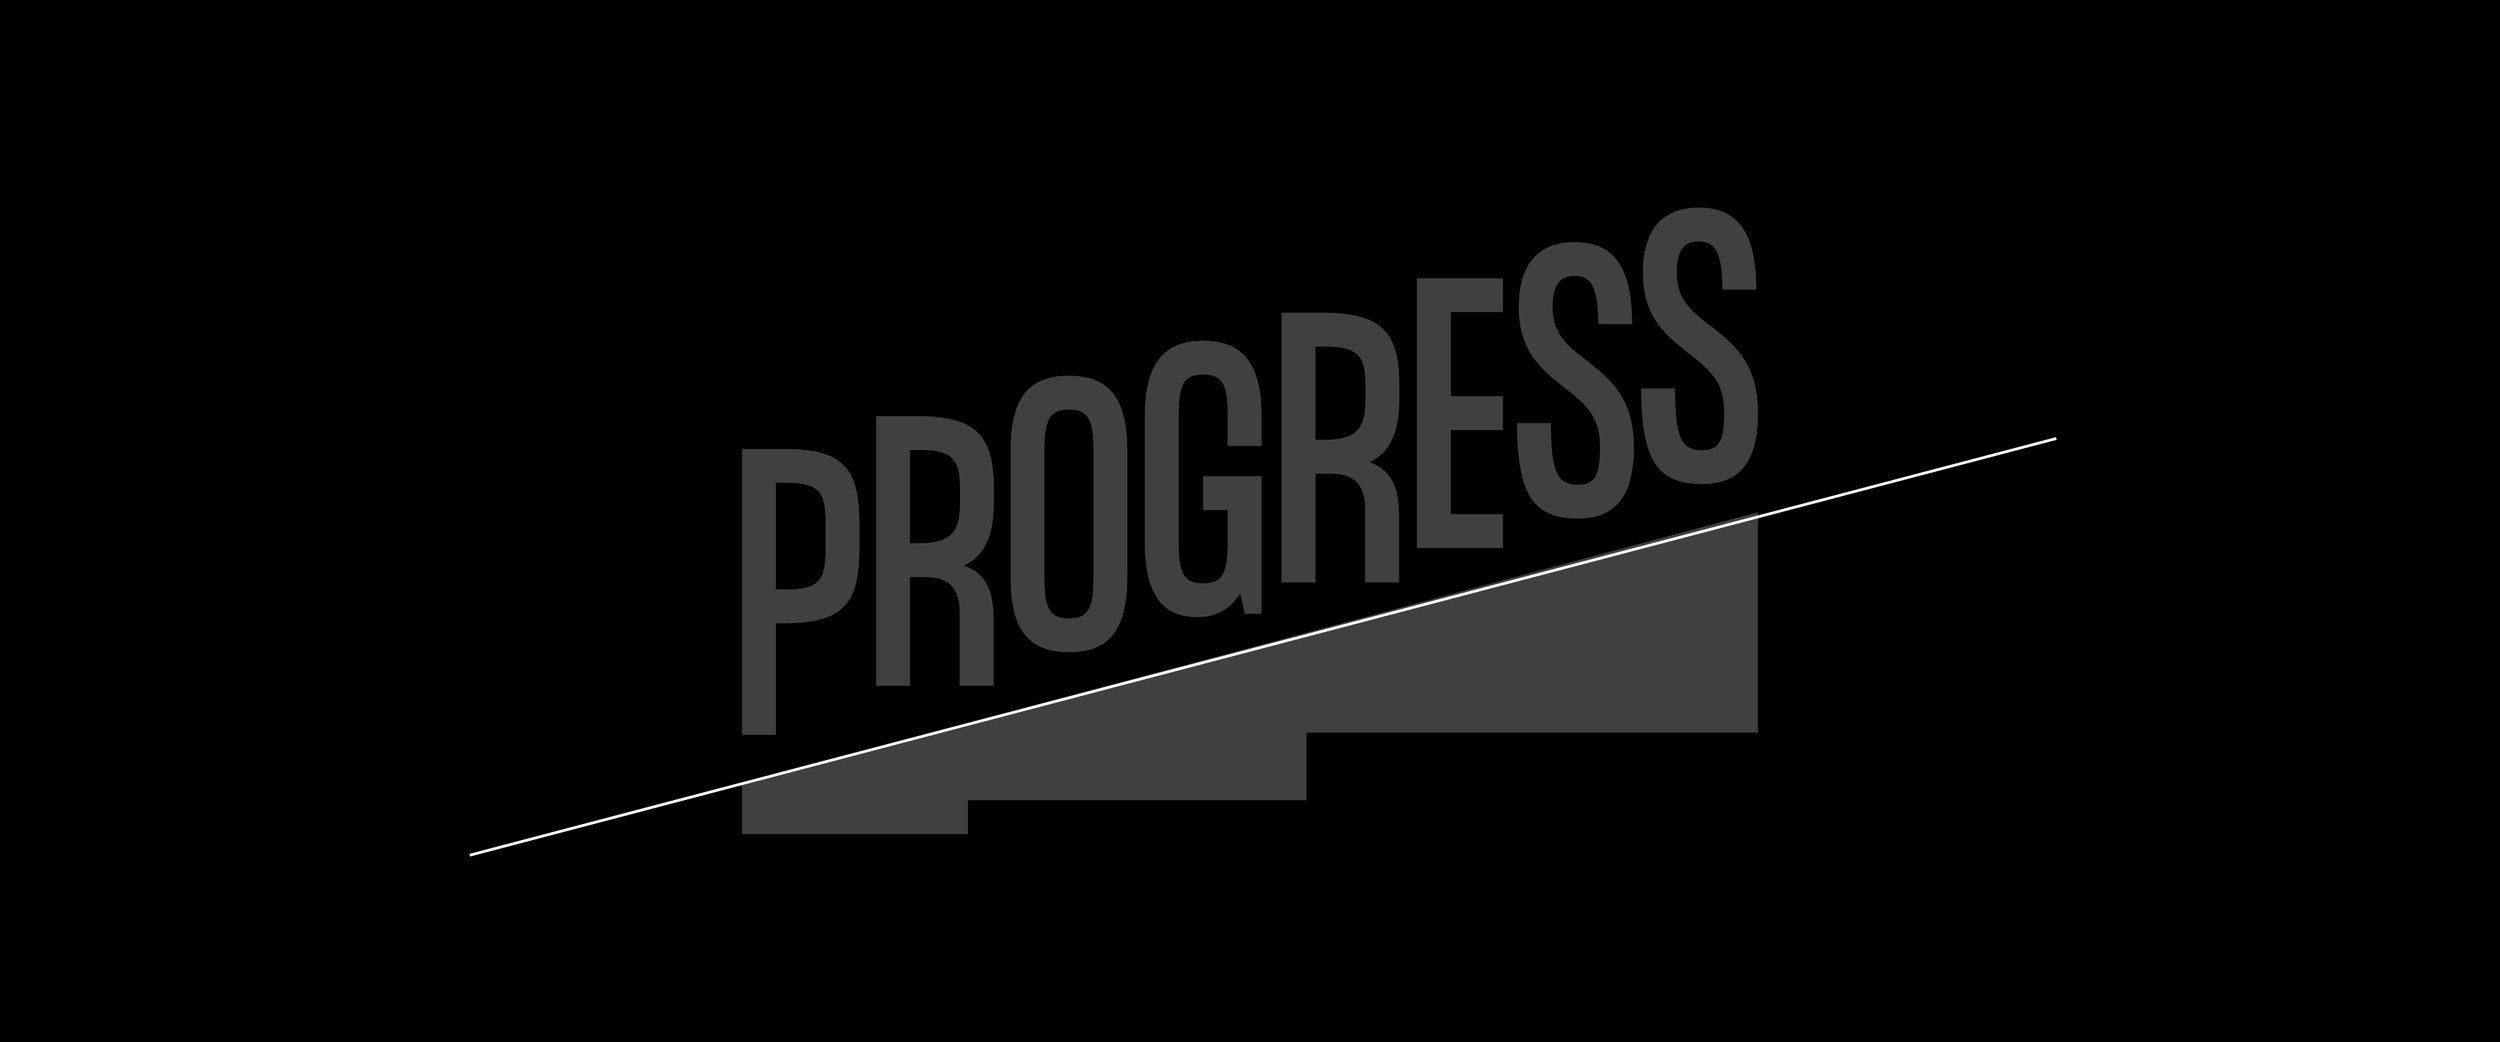 ucm-progress-logo2.jpg